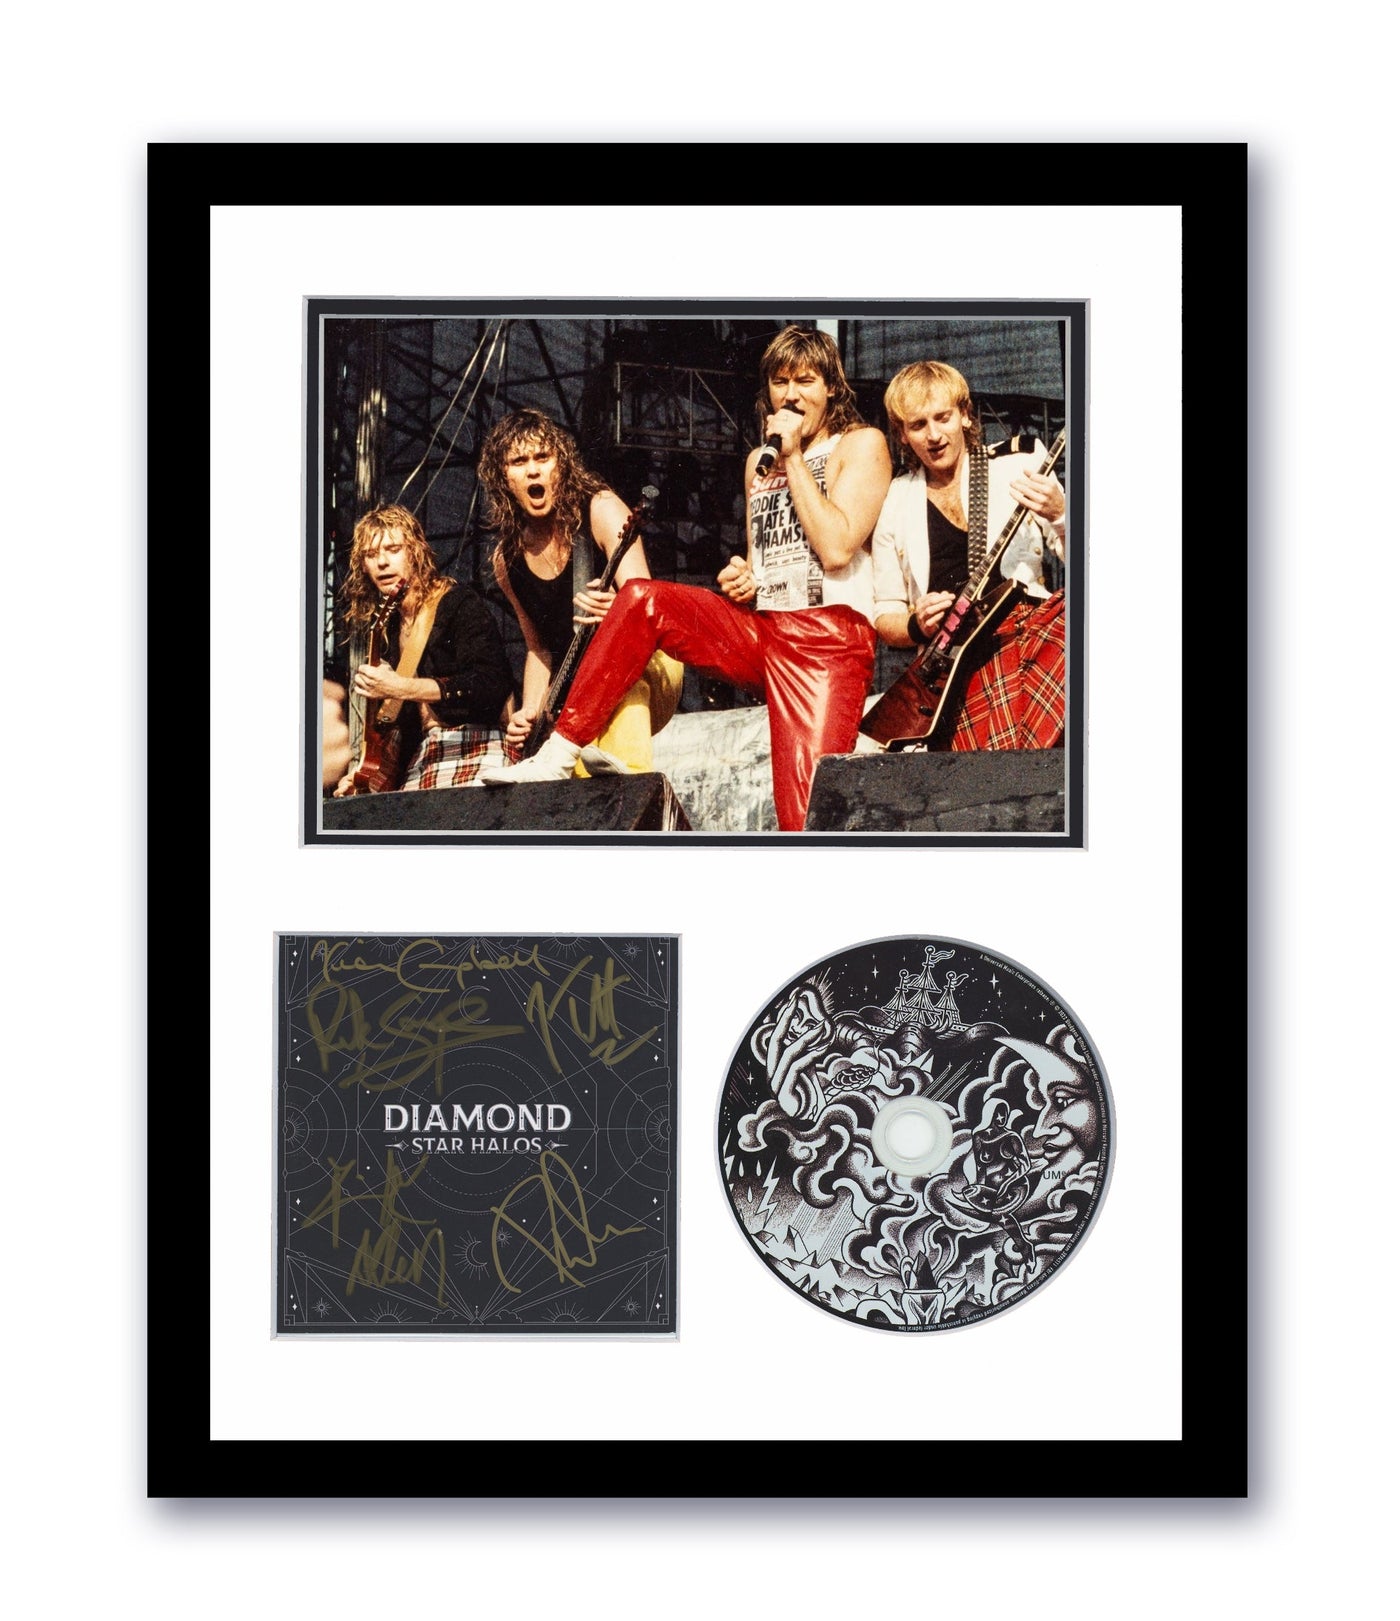 Def Leppard Autographed Signed 11x14 Framed CD Photo Diamond Star Halos ACOA